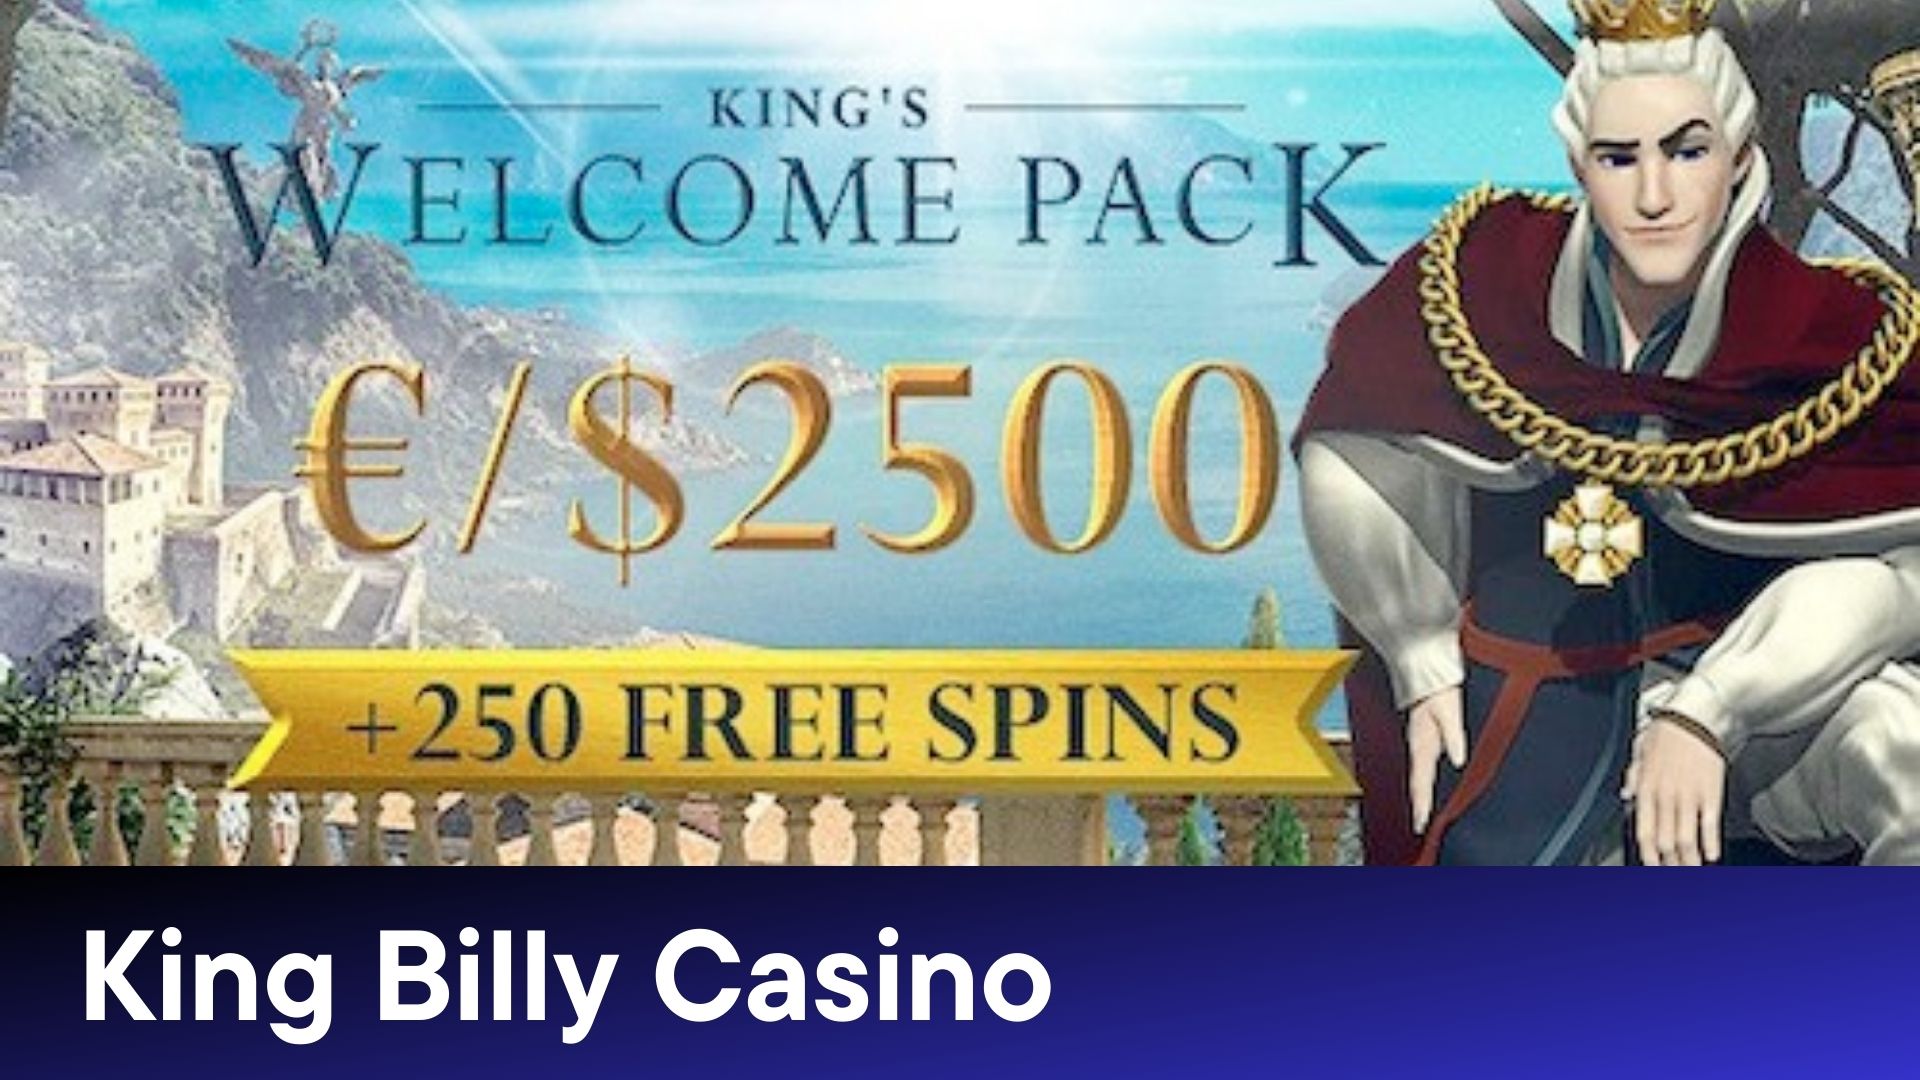 King Billy Casino is Canada’s premier gambling destination